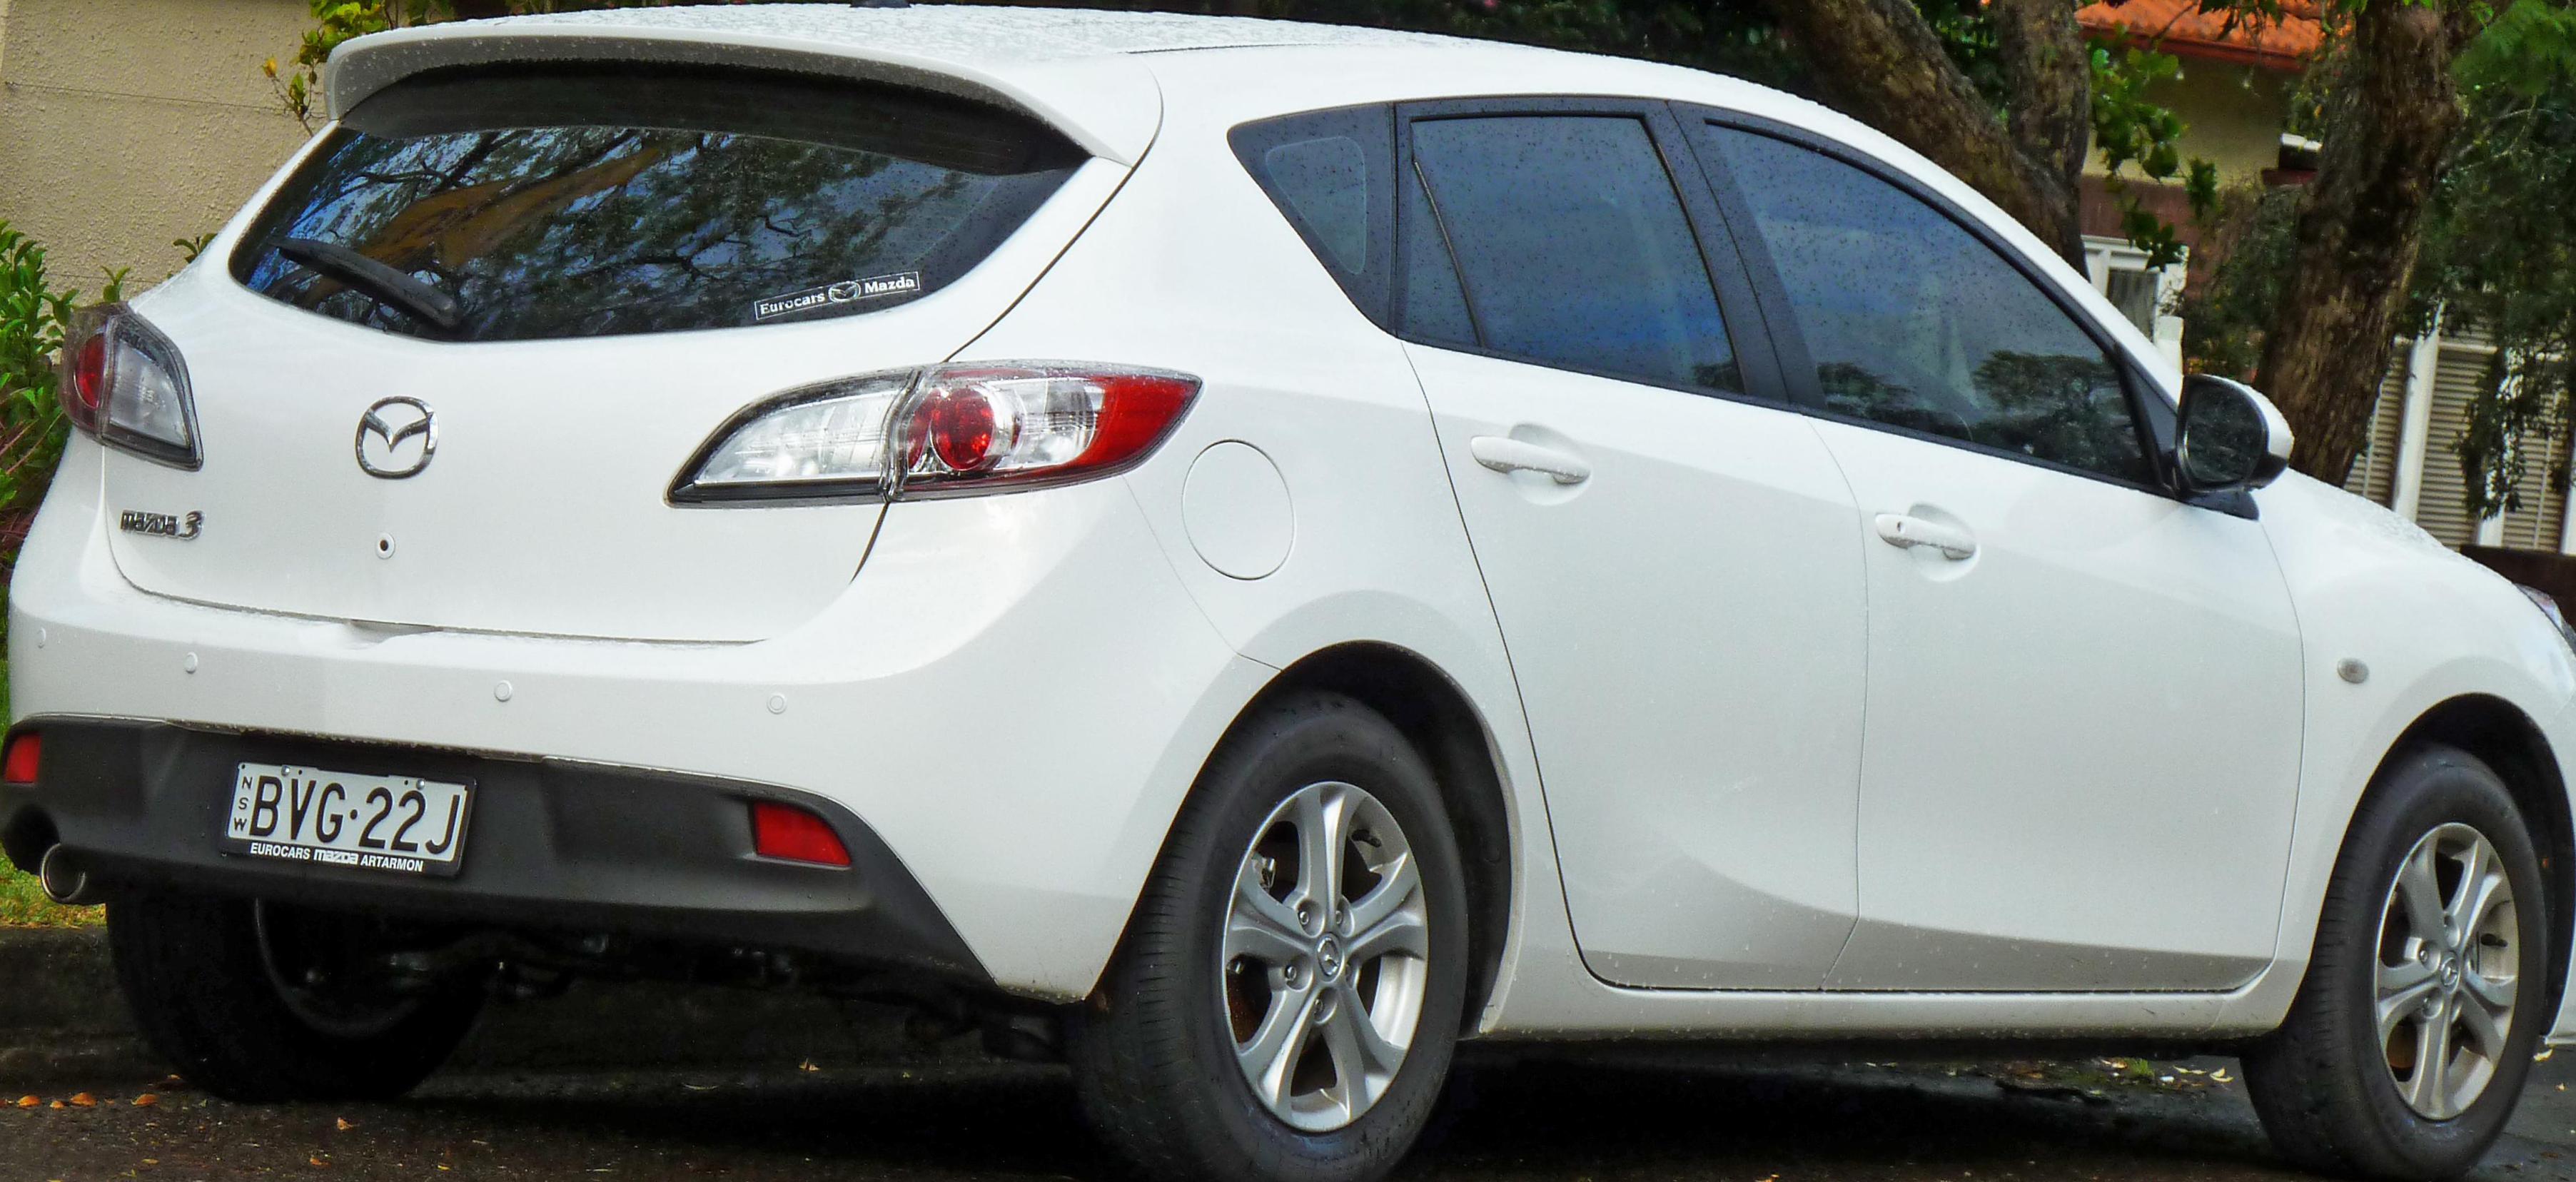 Mazda 3 Hatchback Specifications 2011